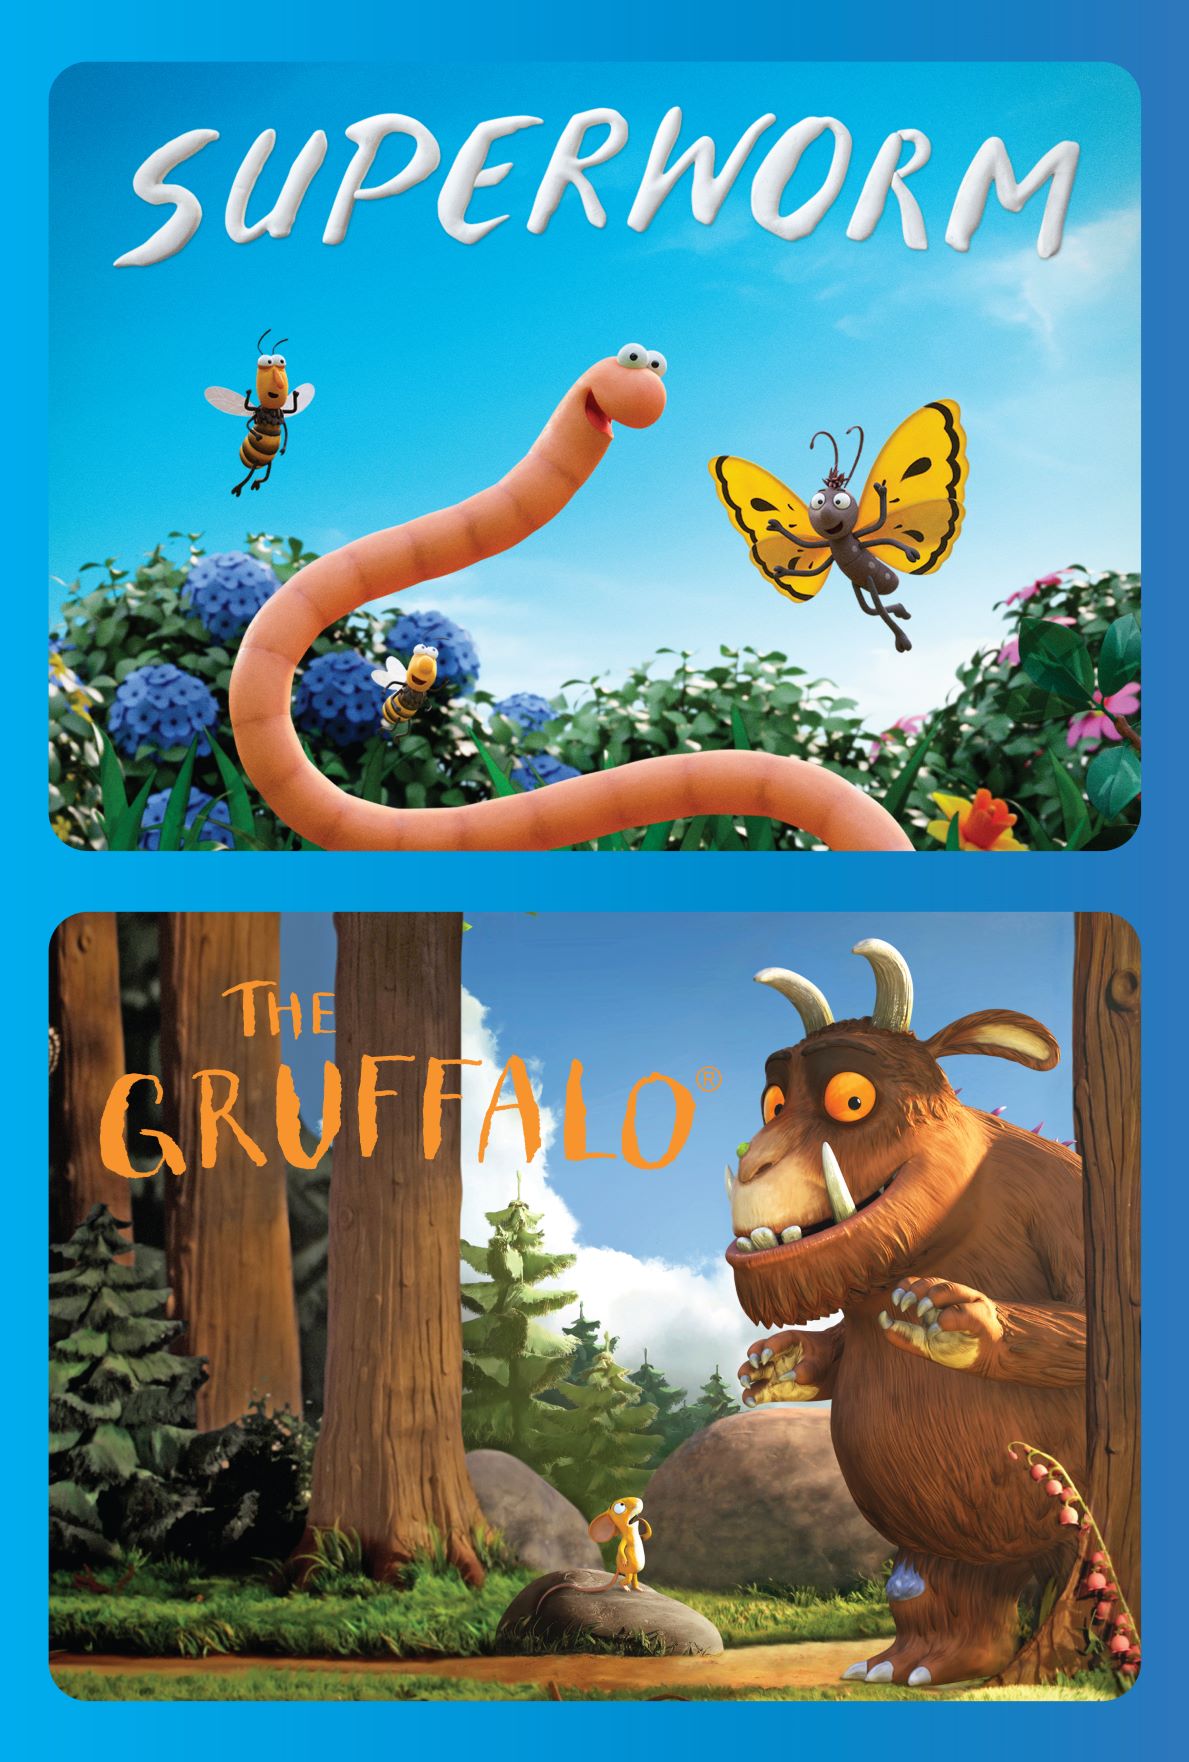 Superworm & The Gruffalo Poster